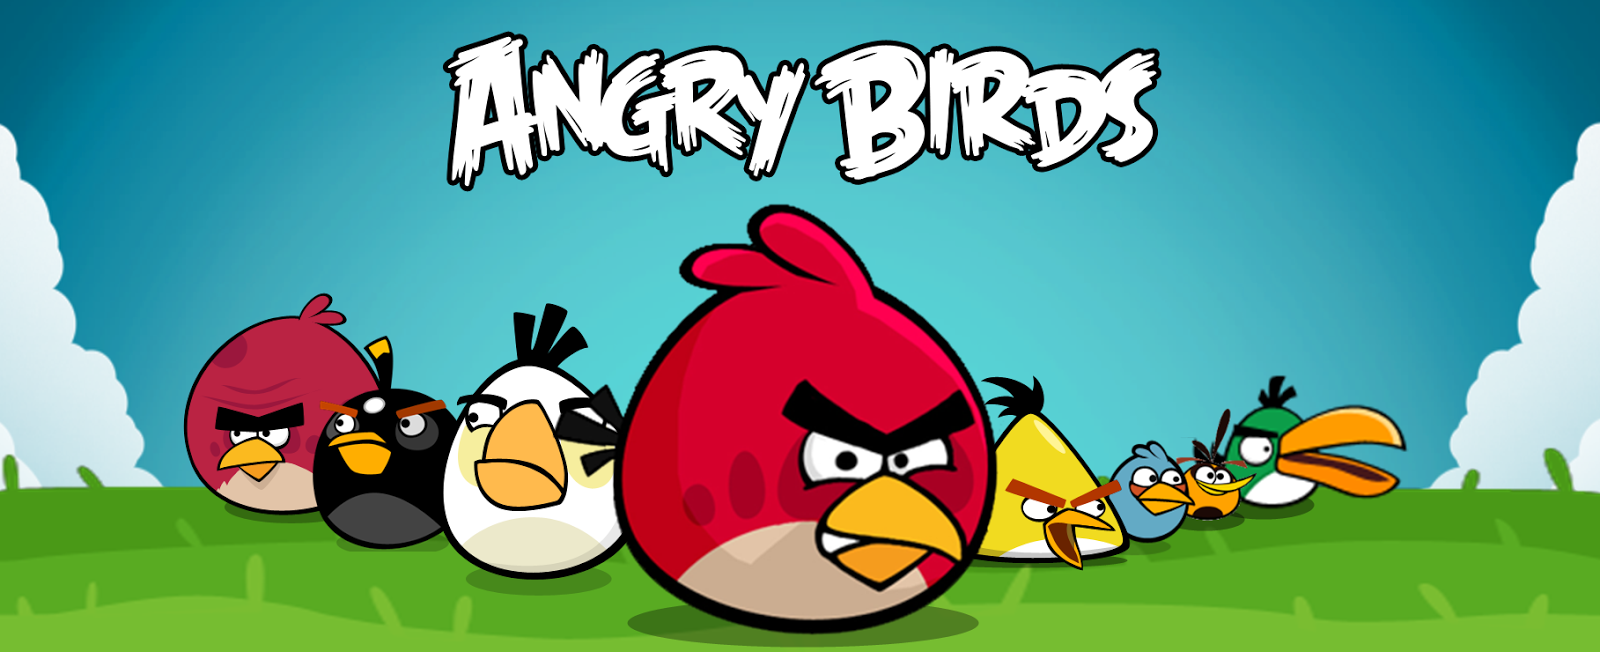 Web Dev NET Angry Birds of JavaScript Green Bird   Mocking